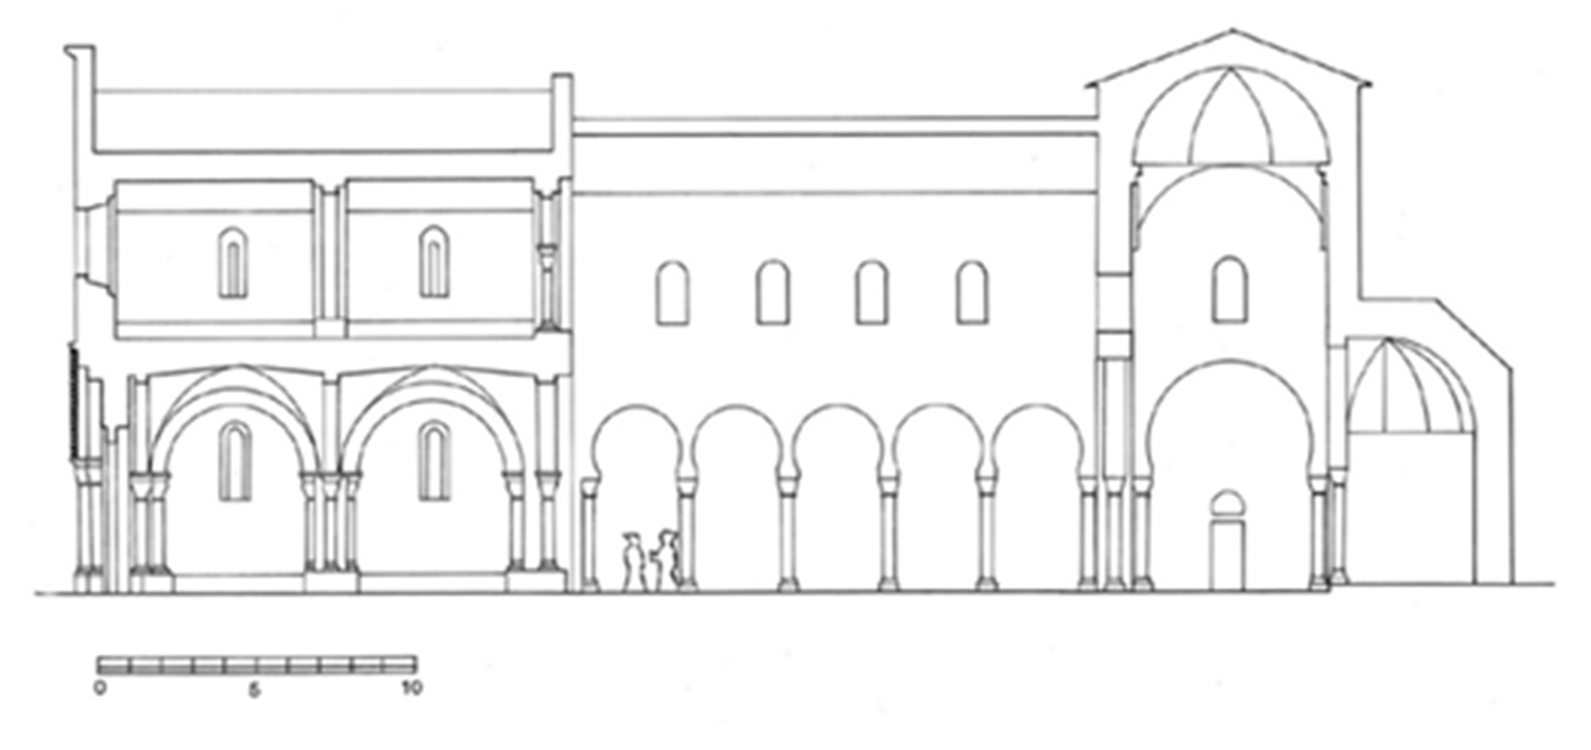 Corte longitudinal de la iglesia financiada por Alfonso III con añadido de bloque occidental románico (J. L. Senra)